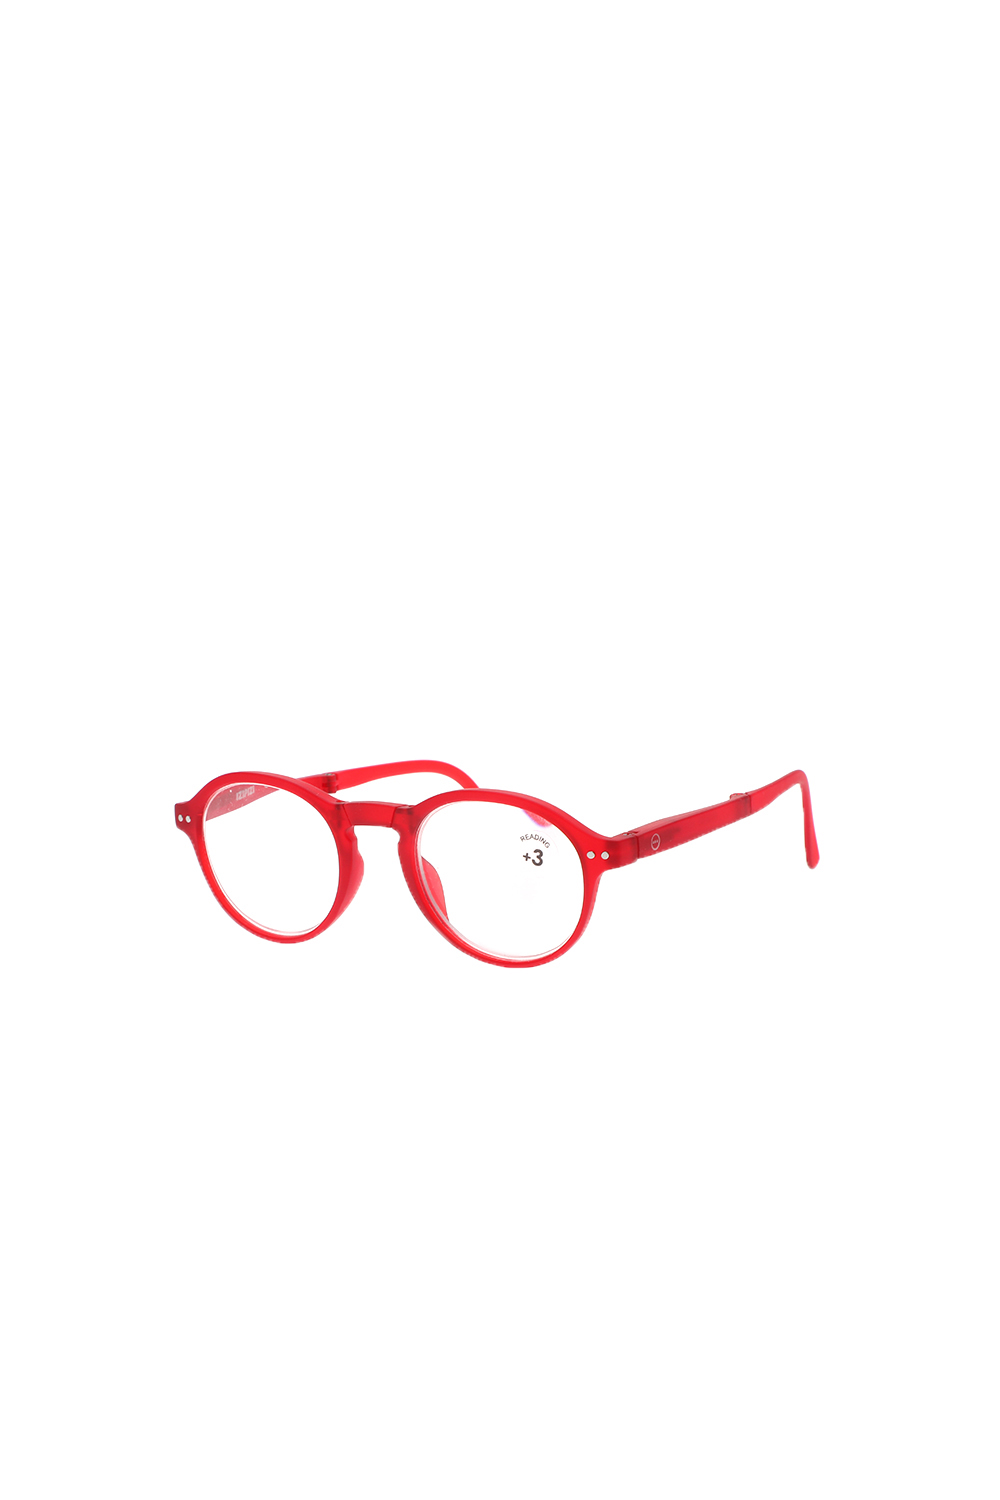 IZIPIZI - Γυαλιά οράσεως αναδιπλούμενα Izipizi κόκκινα Γυναικεία/Αξεσουάρ/Γυαλιά/Οράσεως